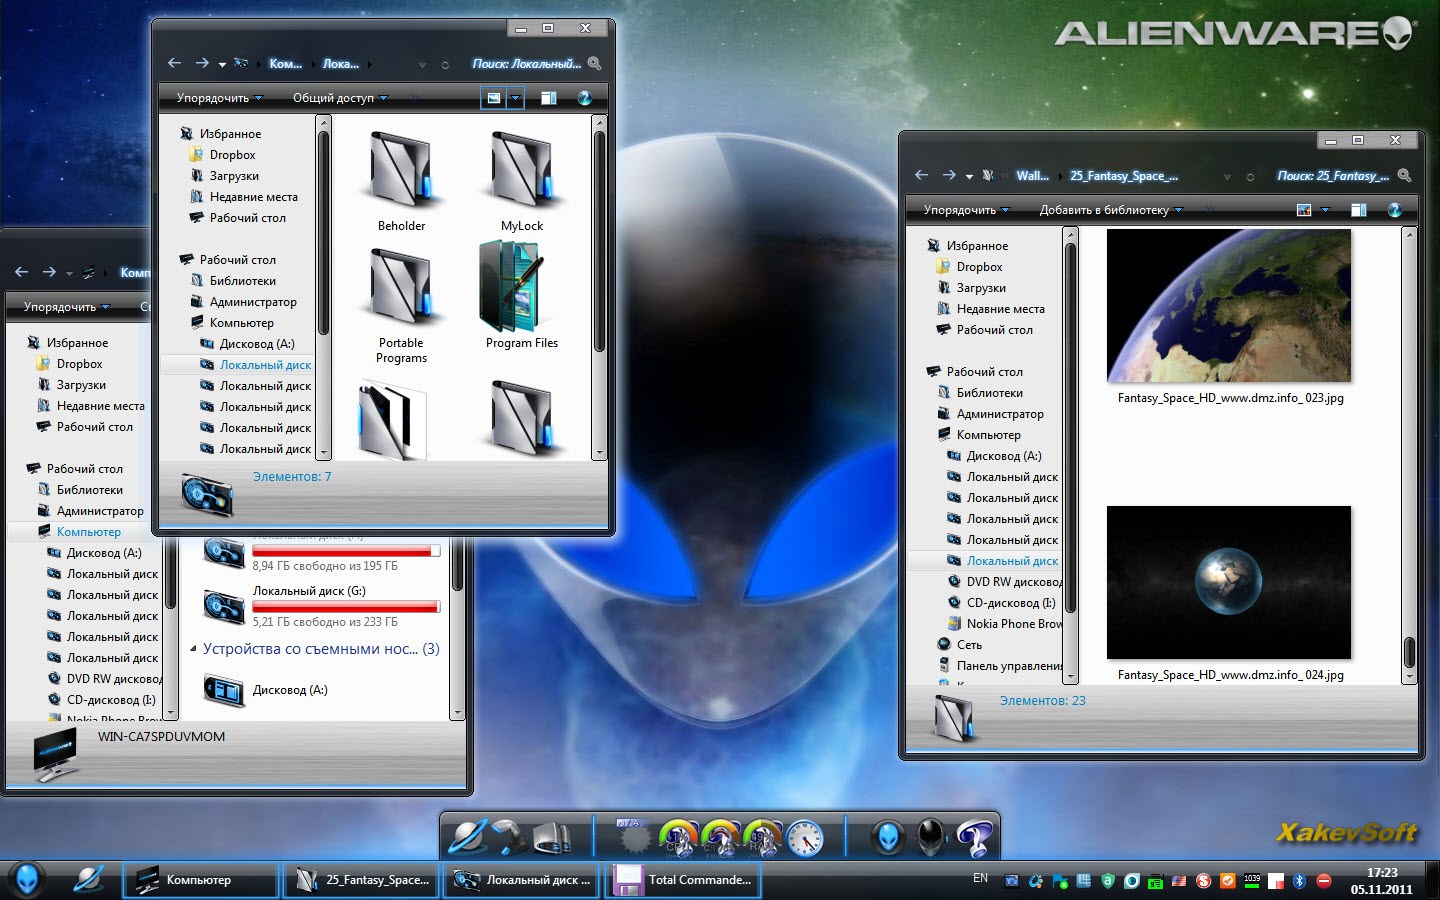 Alienware Skin Pack 1.0 for Windows 7